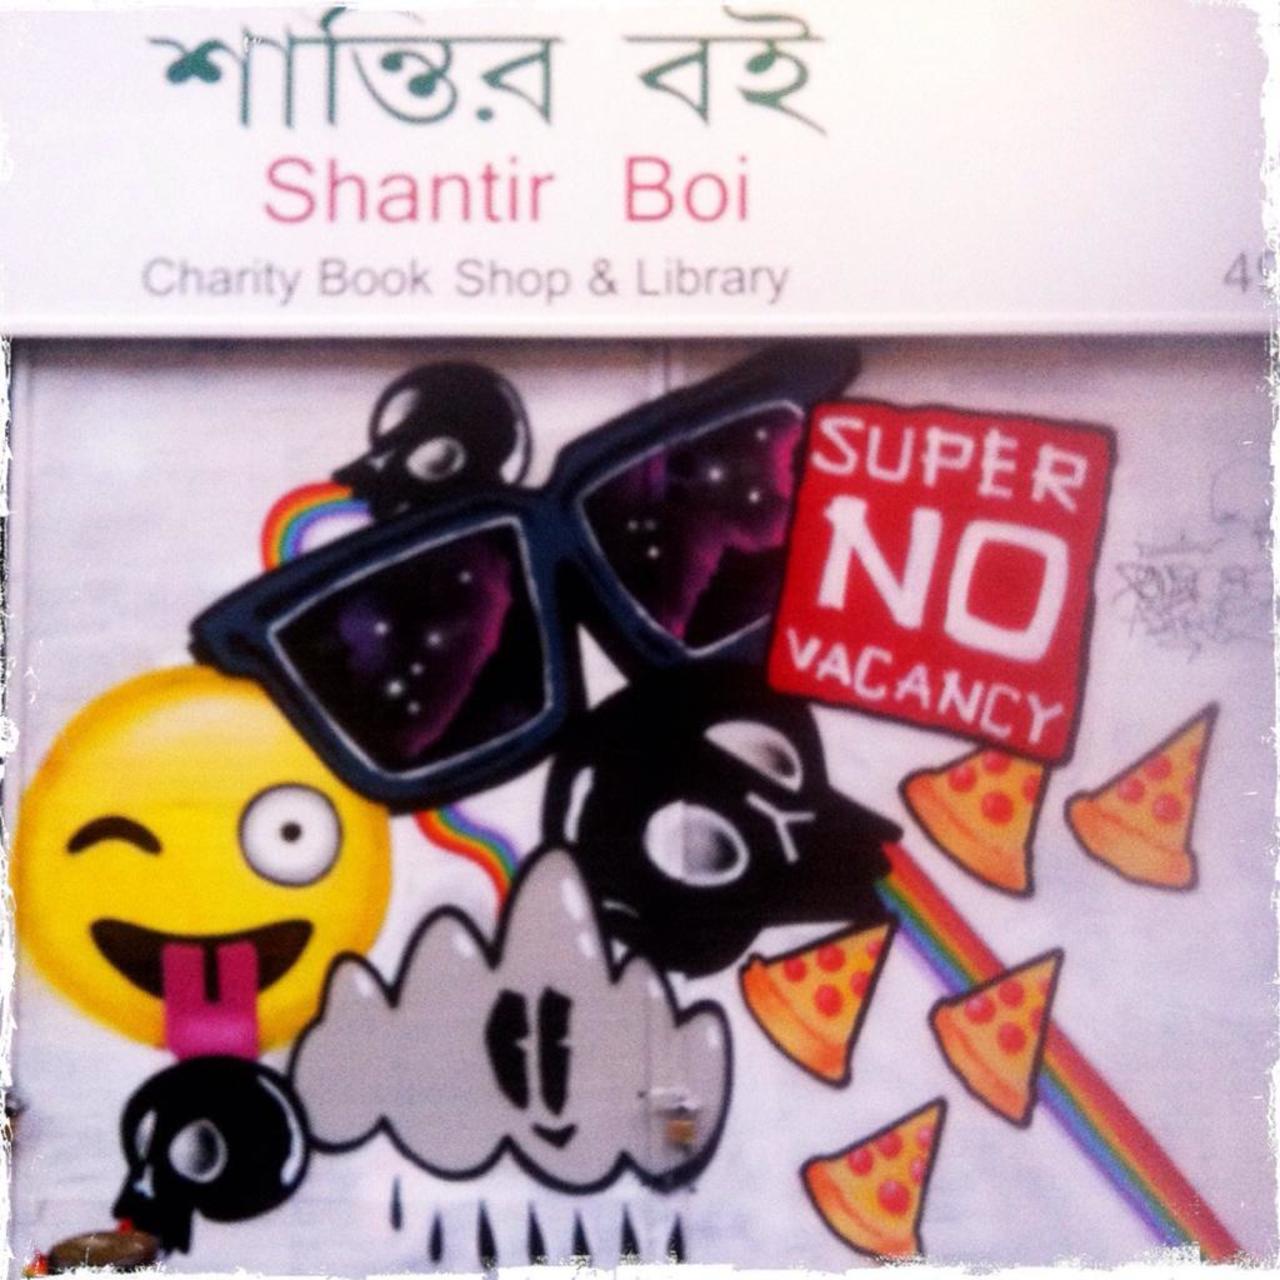 Shutter art at the Shantir Boi charity shop on Fashion Street

#art #streetart #graffiti http://t.co/UHeTnHwOMI https://goo.gl/t4fpx2